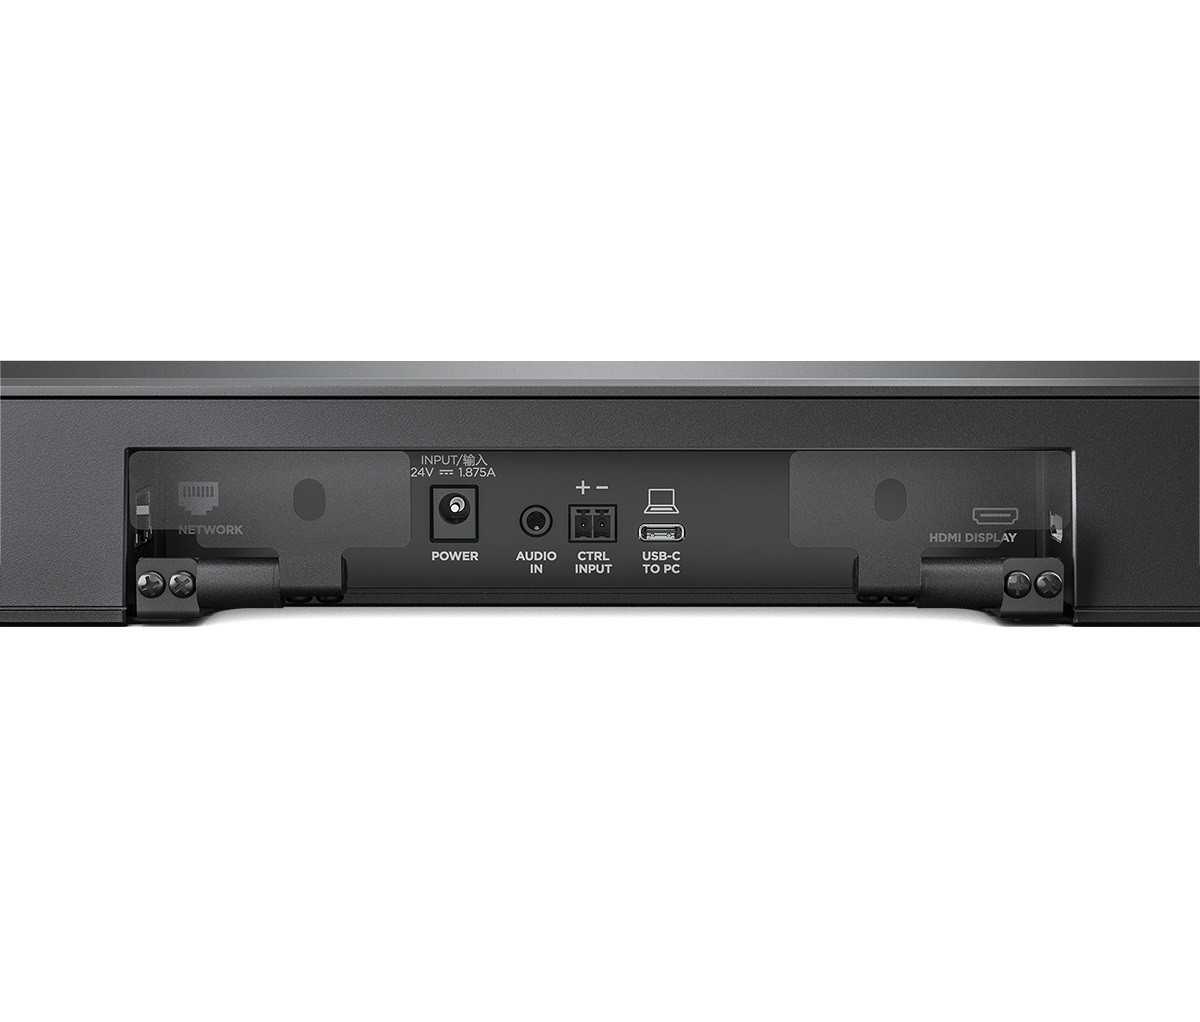 Bose-Videobar-VB1-All-in-One-USB-conferentiesysteem-8MP-USB-C-5x-zoom-123-FoV-UHD-2160p